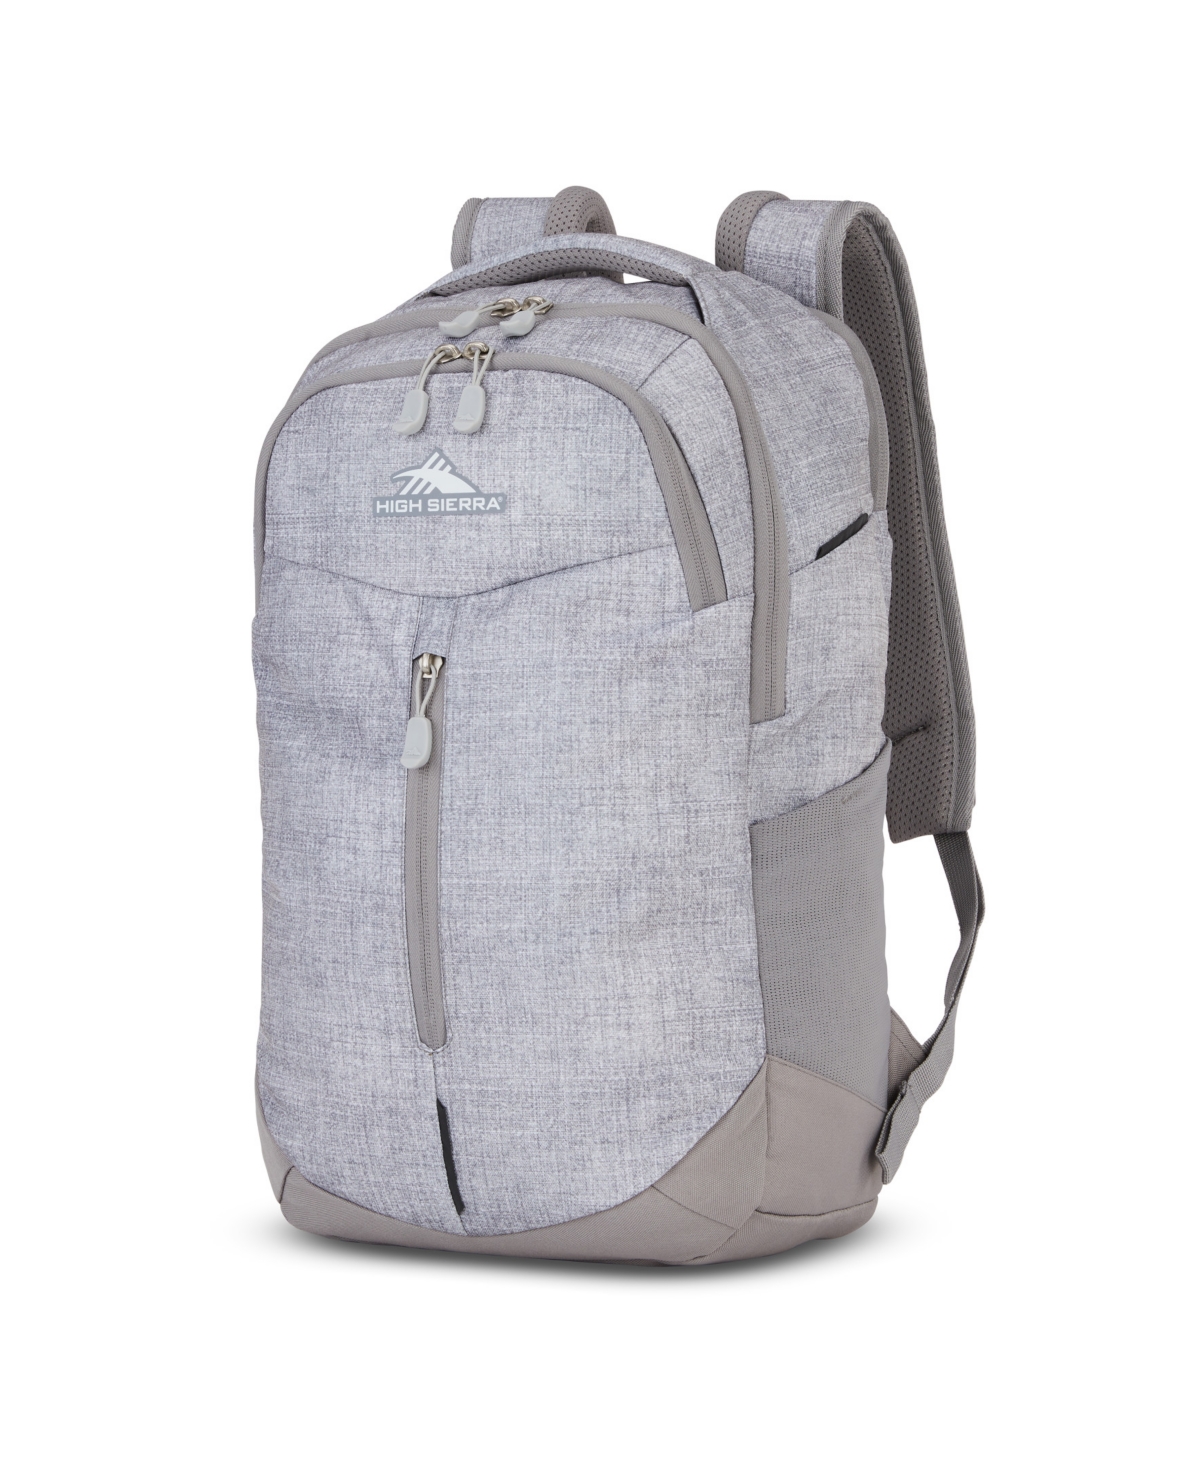 Swerve Pro Backpack - Silver